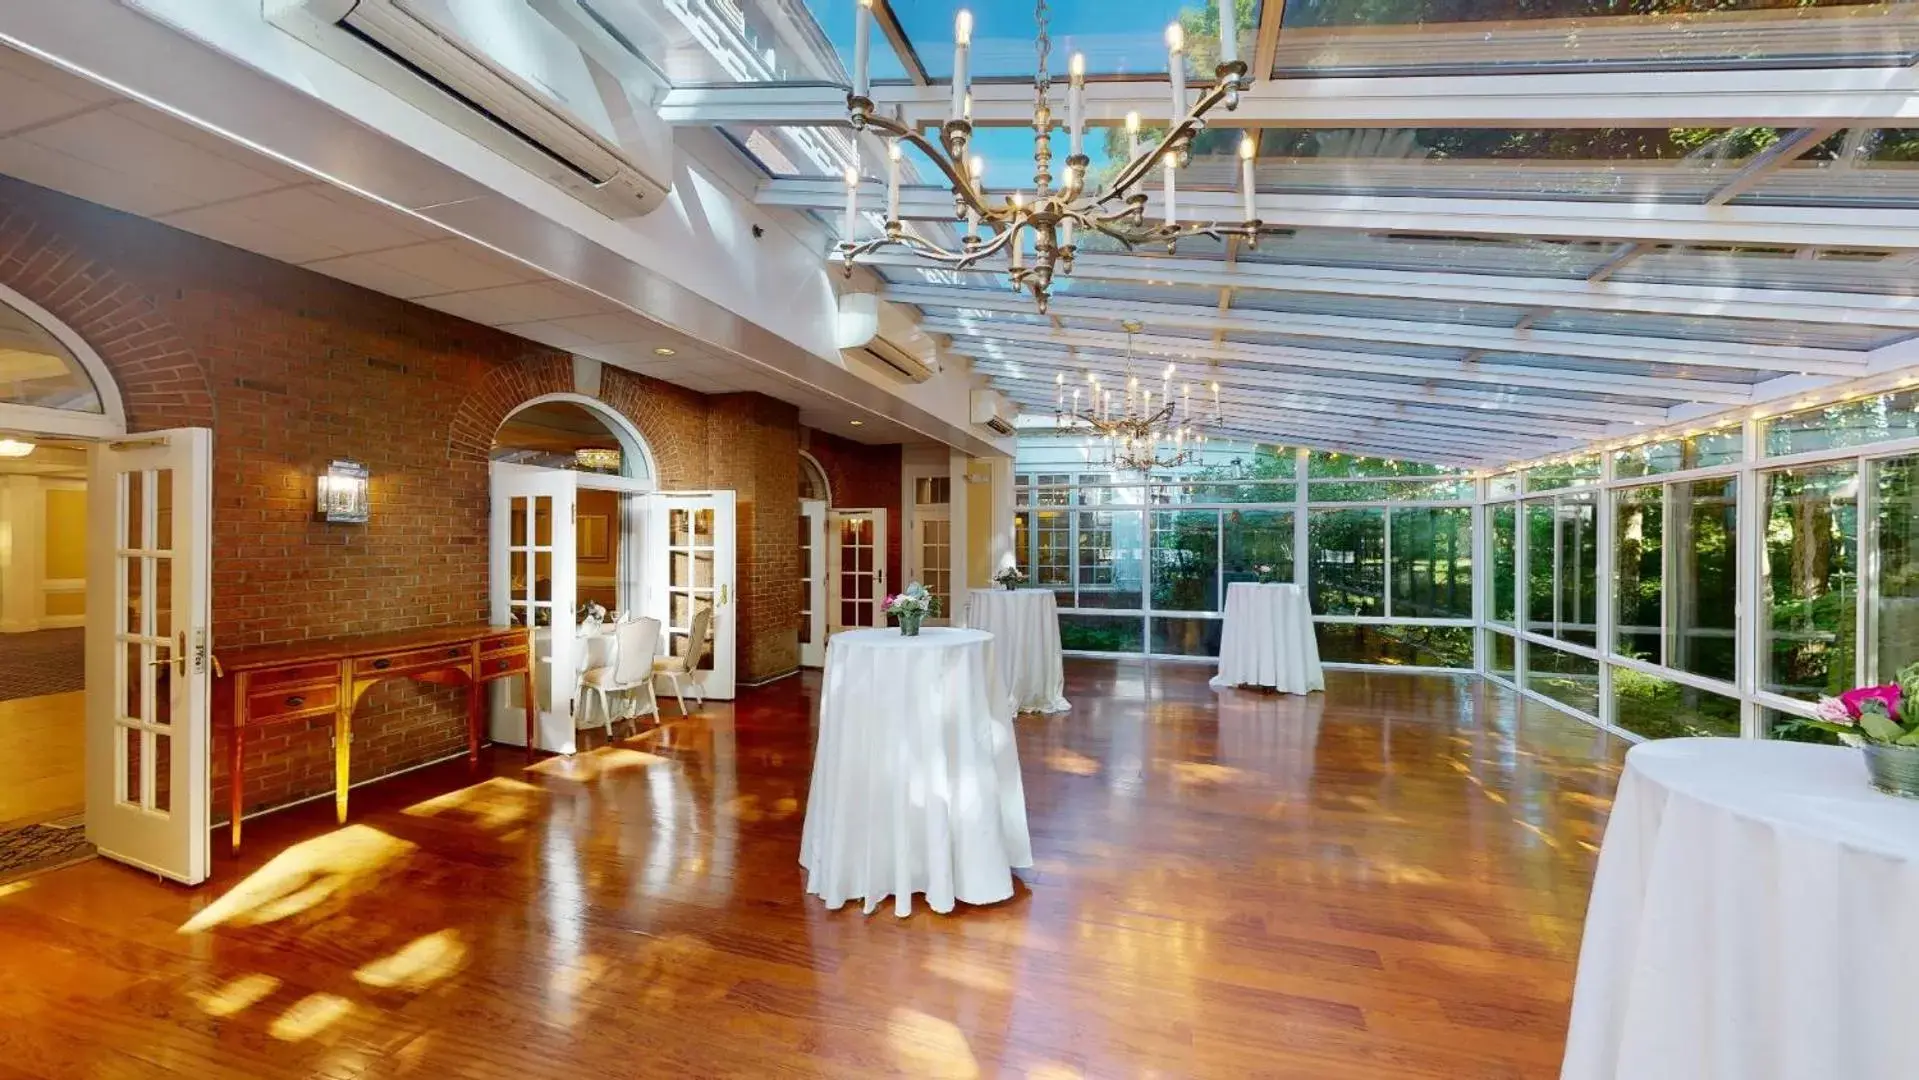 Banquet/Function facilities, Banquet Facilities in Avon Old Farms Hotel